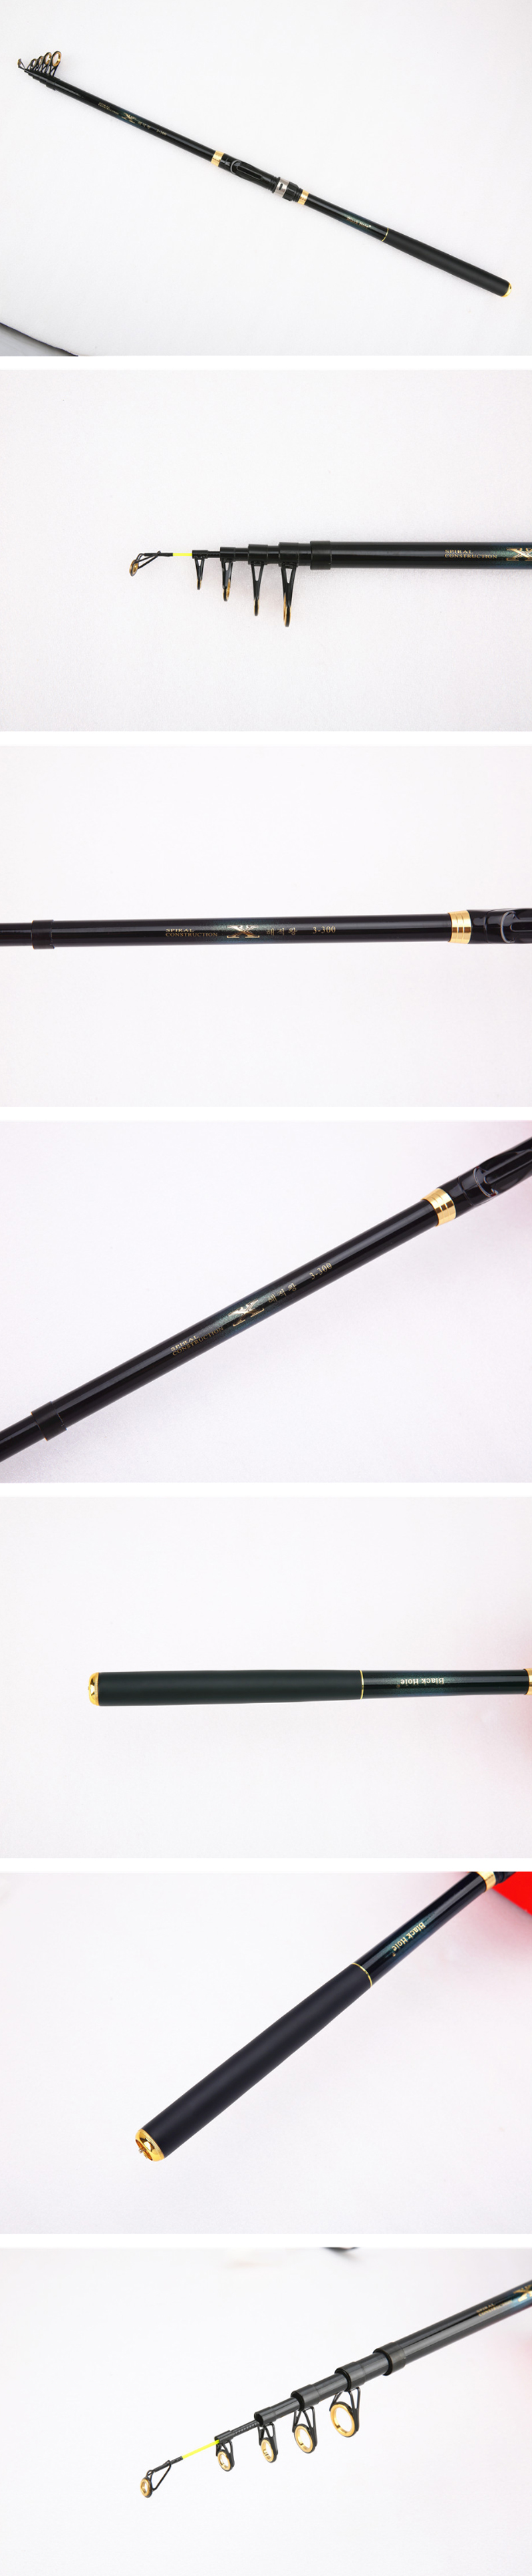 ZANLURE-1-Pcs-2124273m-Telescopic-Fishing-Rod-Carbon-Fiber-Fishing-Pole-Outdoor-Fishing-Tool-1529181-2